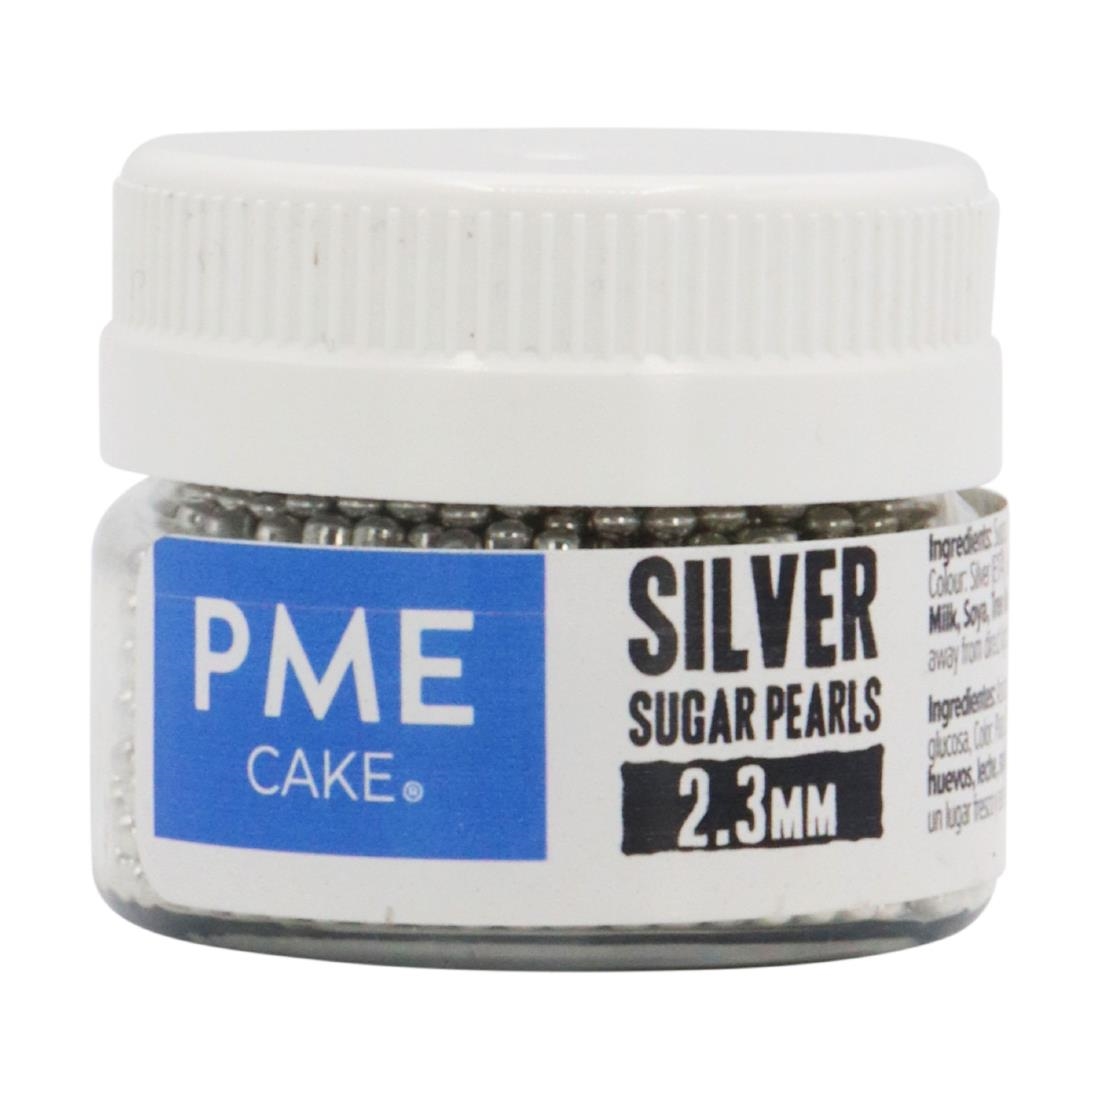 PME Silver Sugar Pearls 2-3mm (HU230)